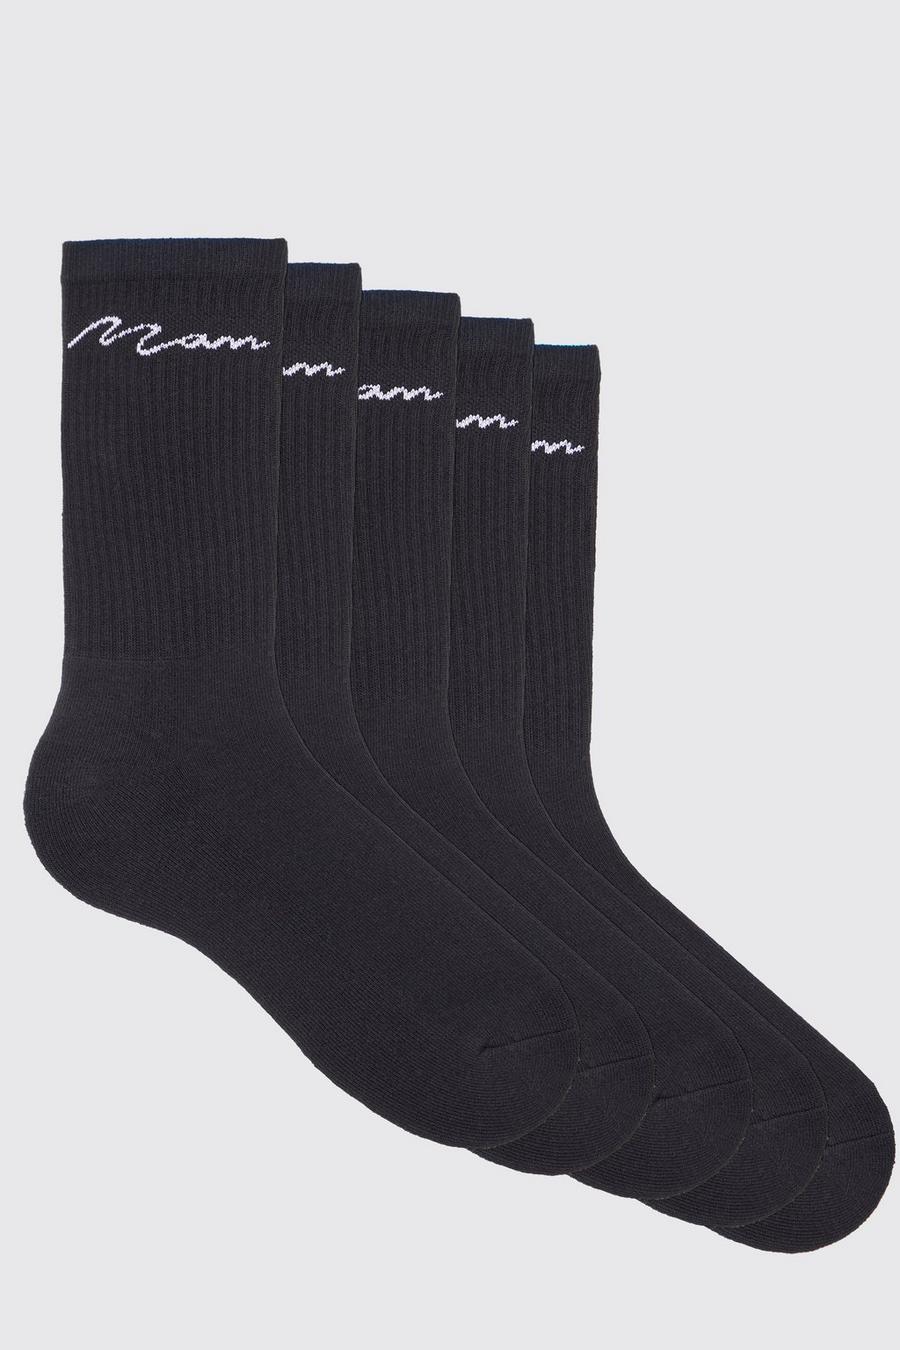 Black 5 Pack Man Signature Sport Socks